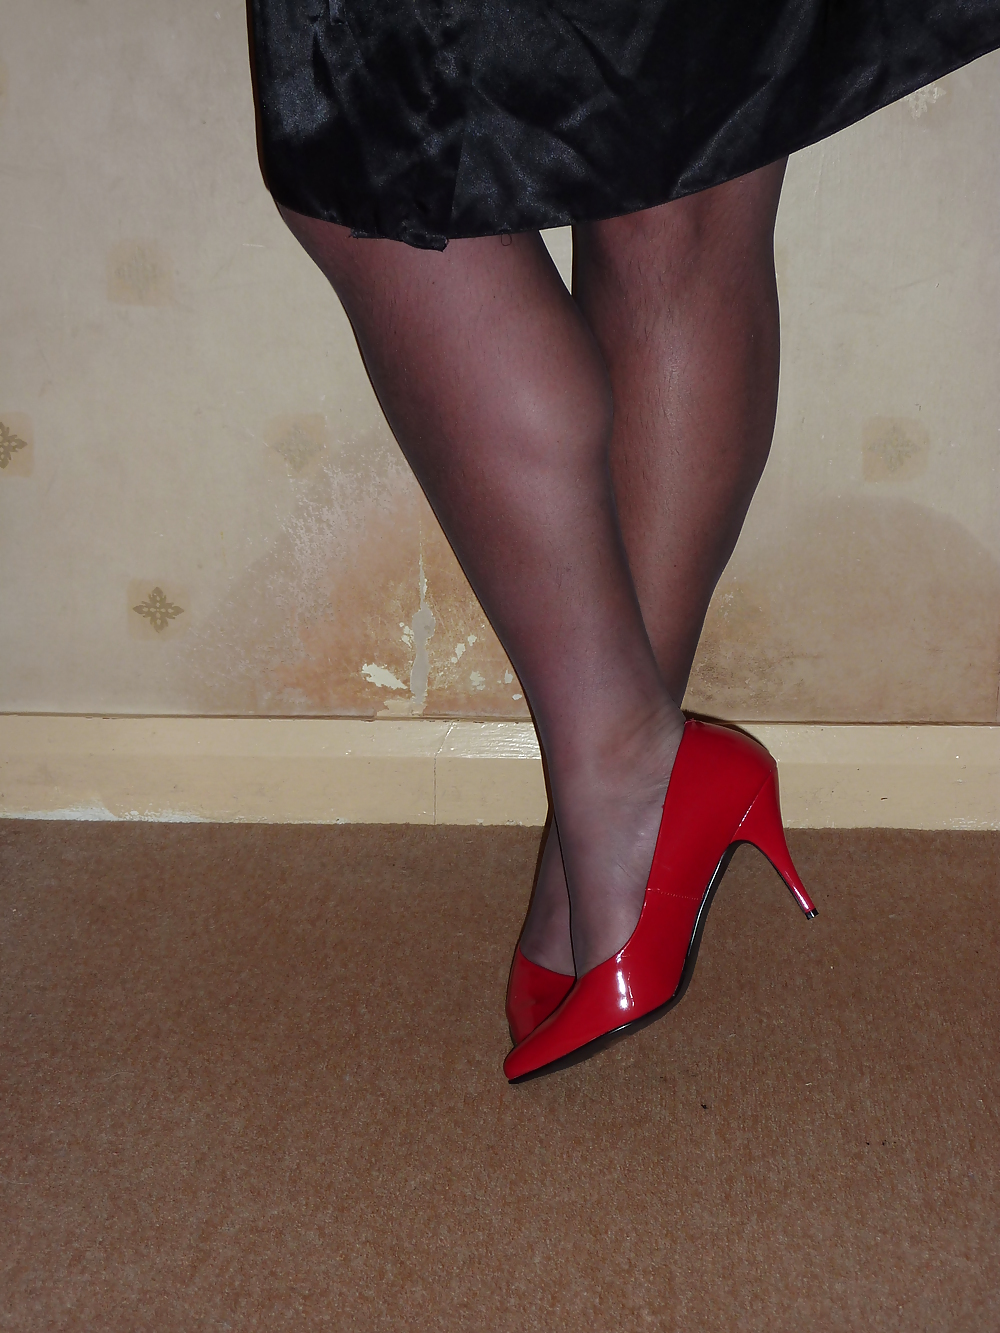 Legs, high heels #4496460